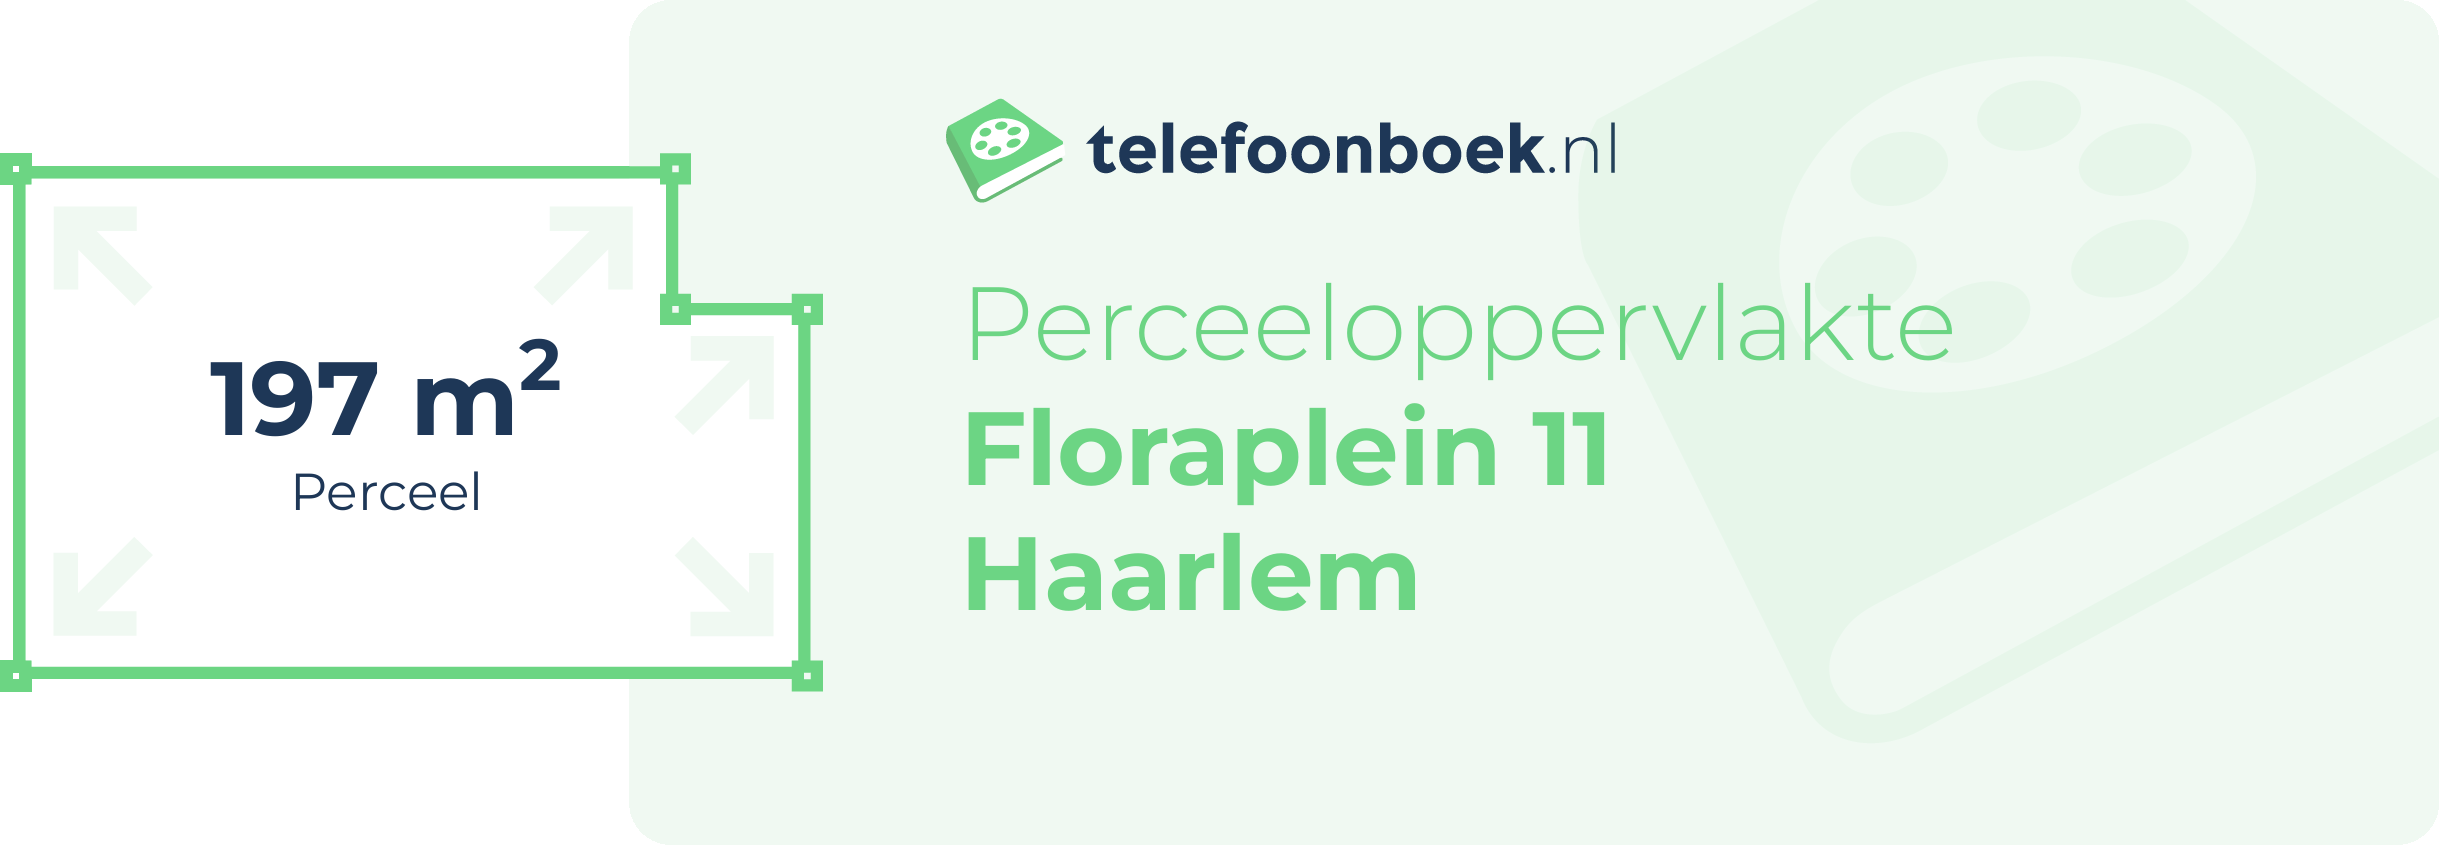 Perceeloppervlakte Floraplein 11 Haarlem